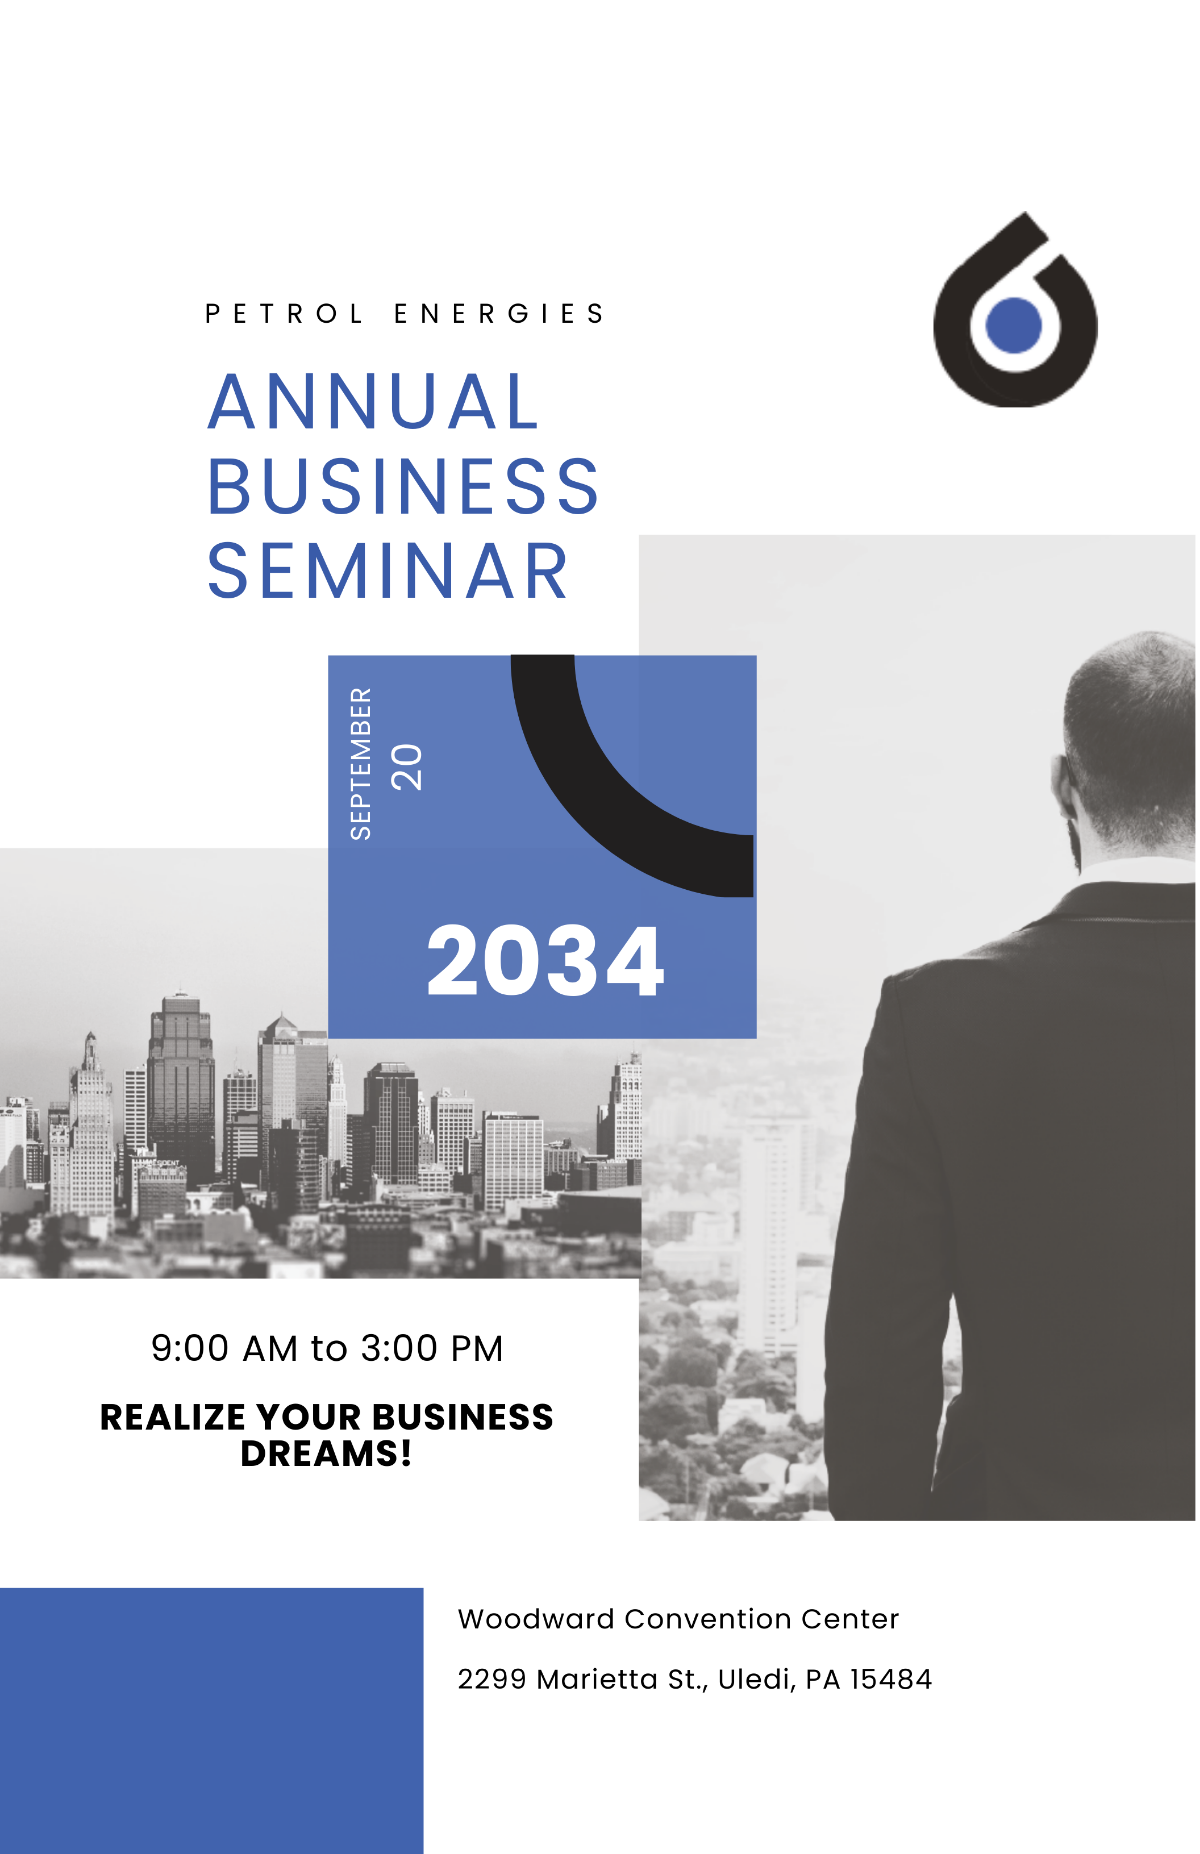 Business Seminar Poster Template